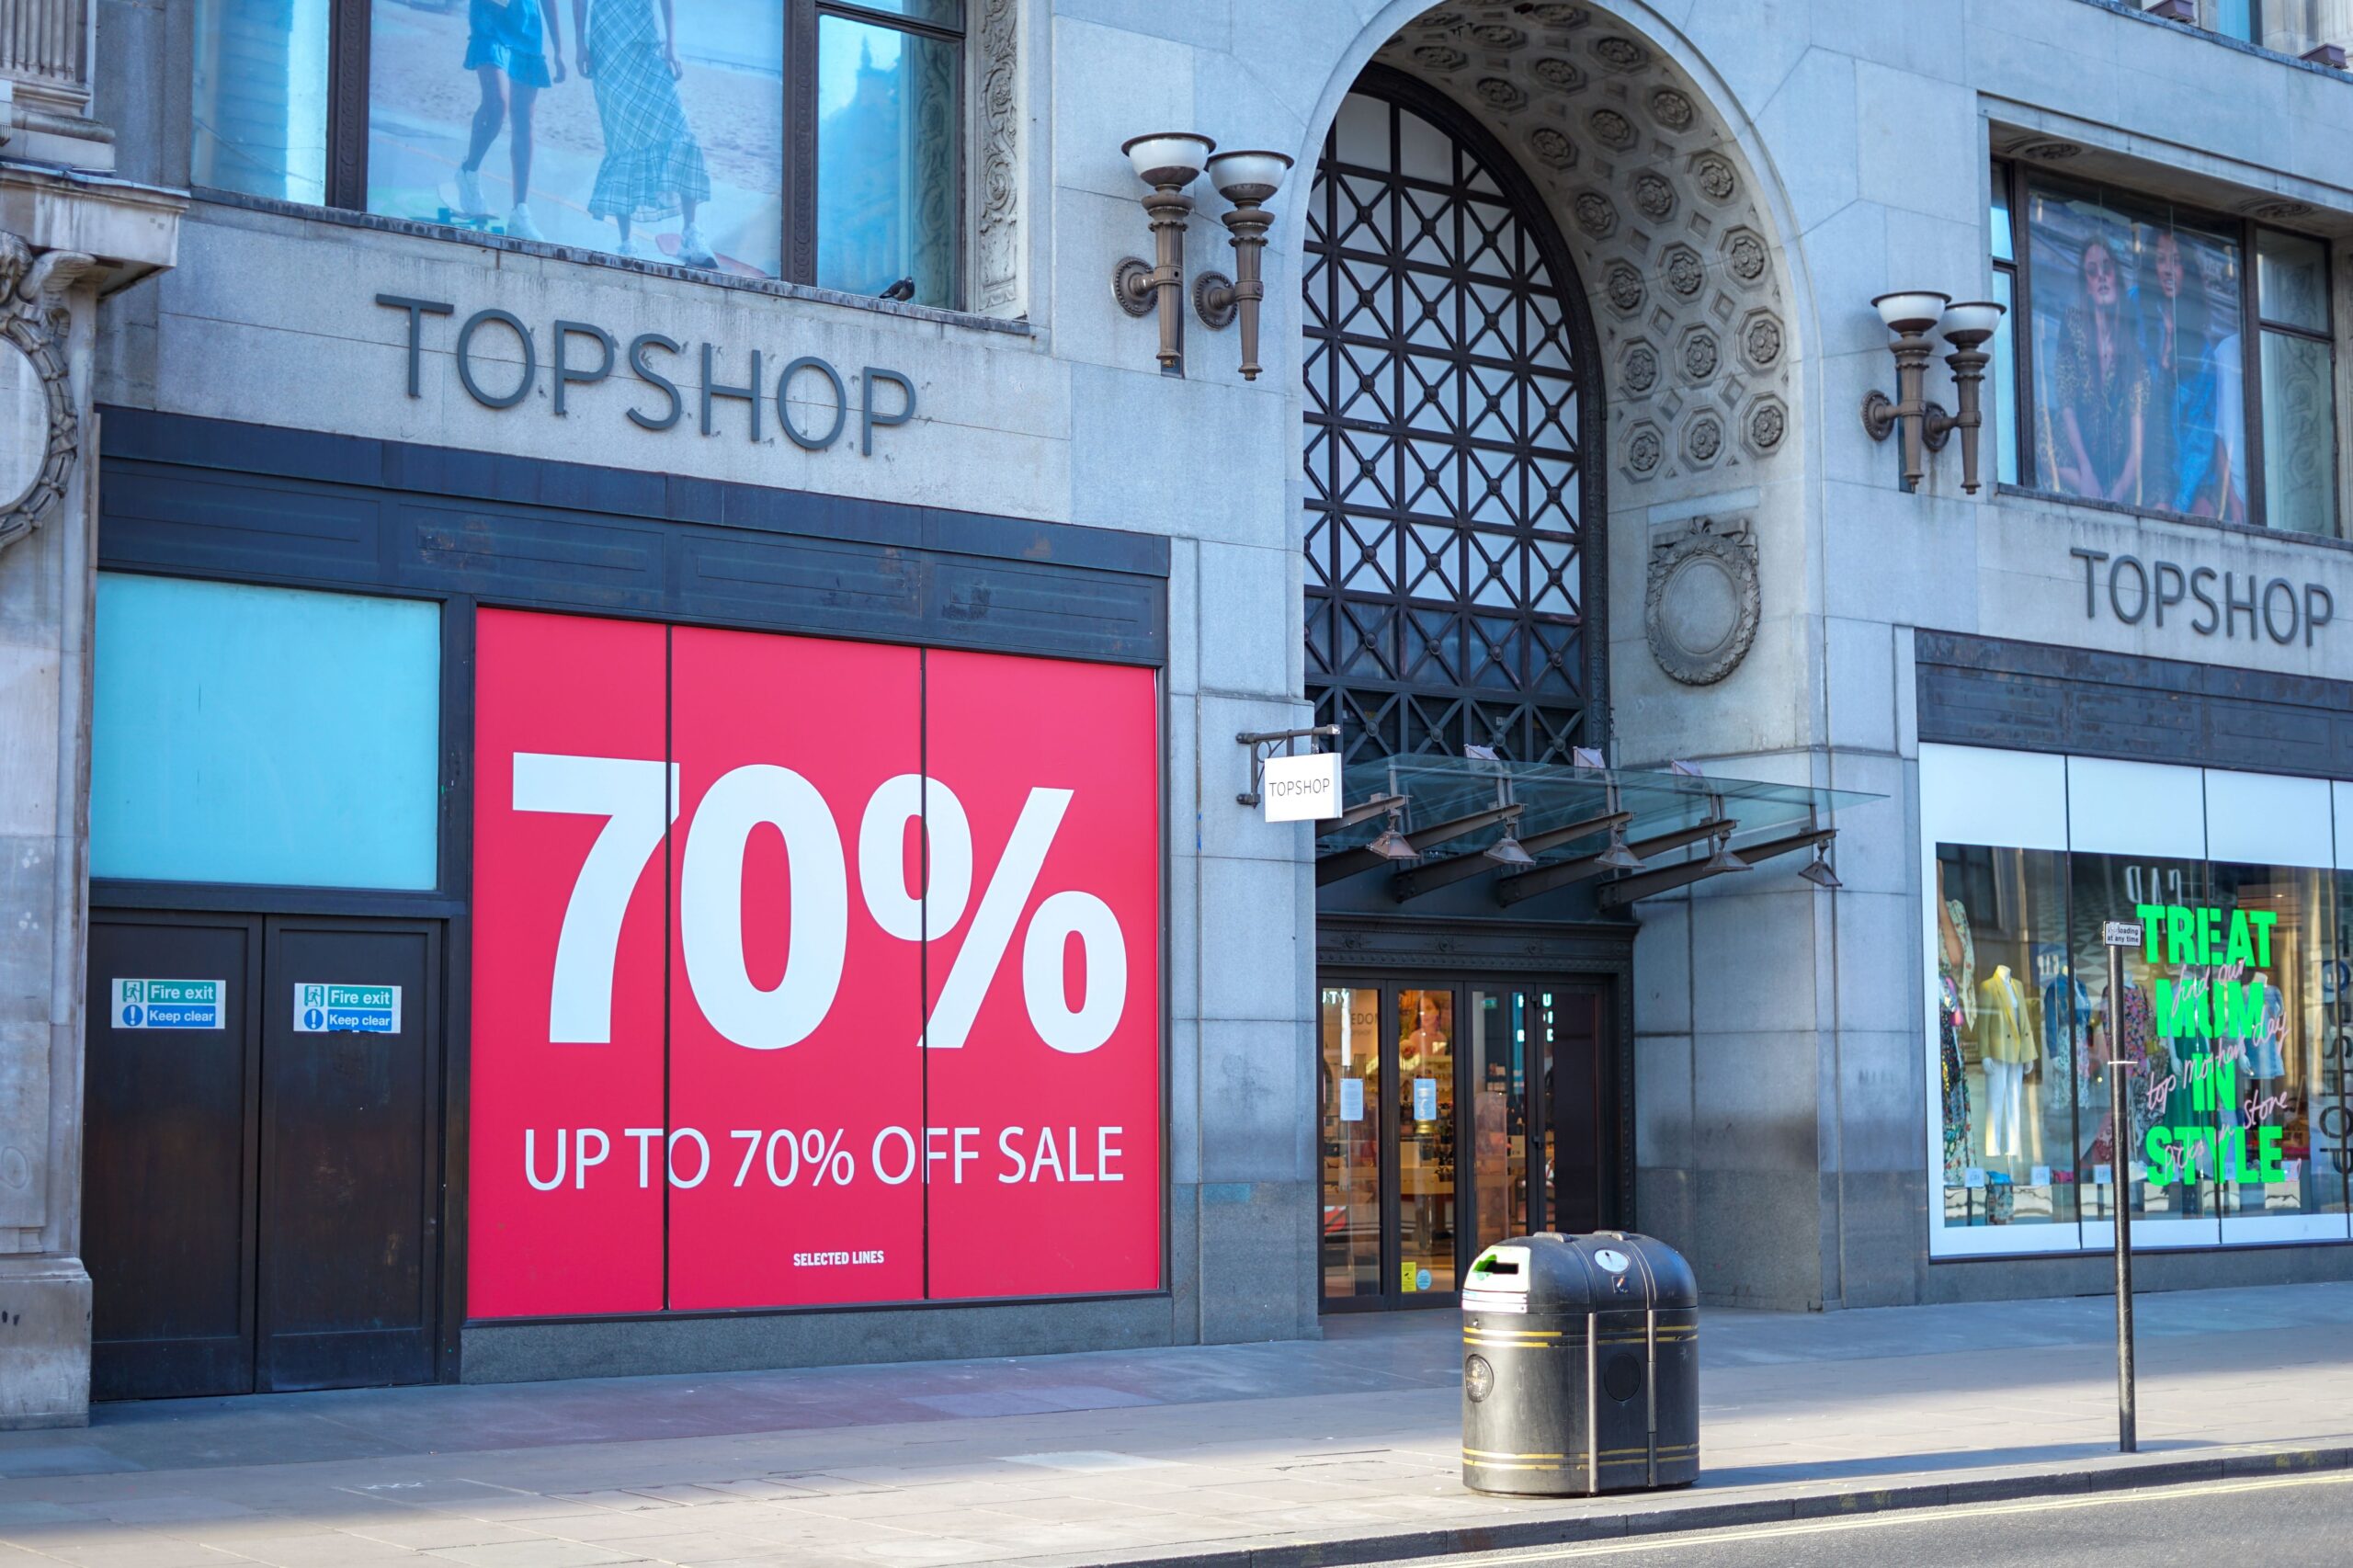 Report: UK’s ASOS Exploring Sale of Topshop Brand